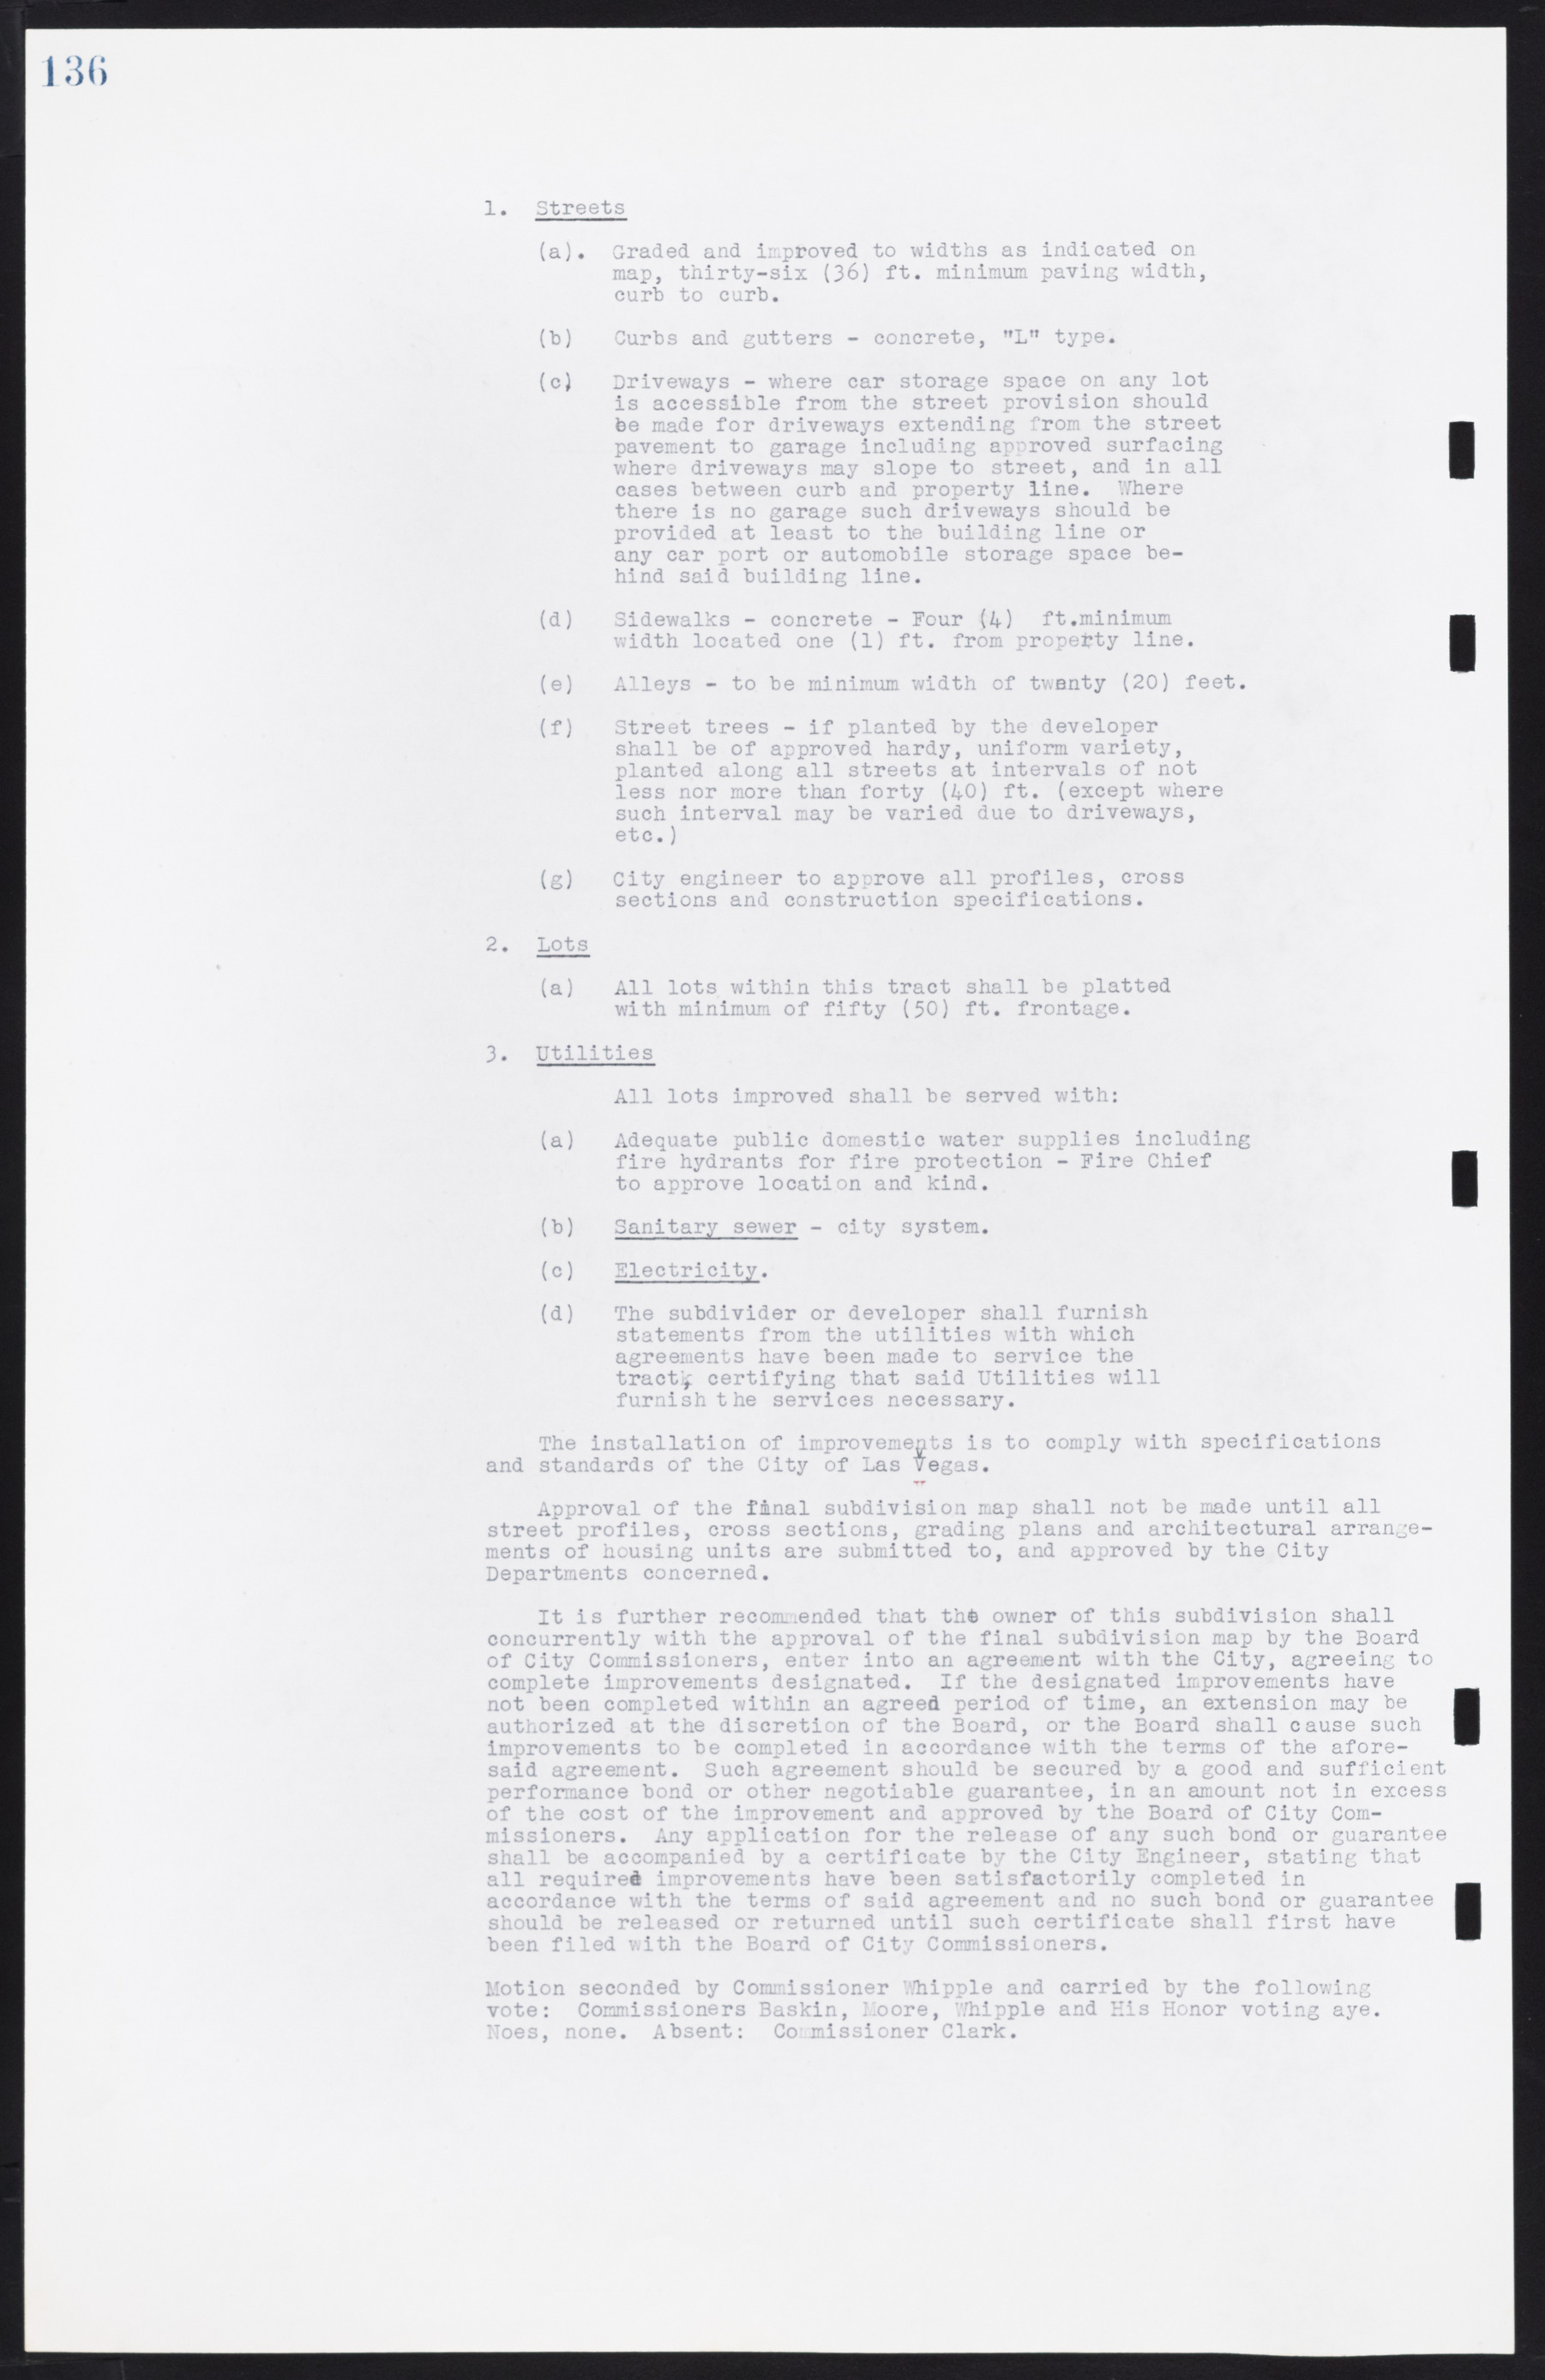 Las Vegas City Commission Minutes, January 7, 1947 to October 26, 1949, lvc000006-154